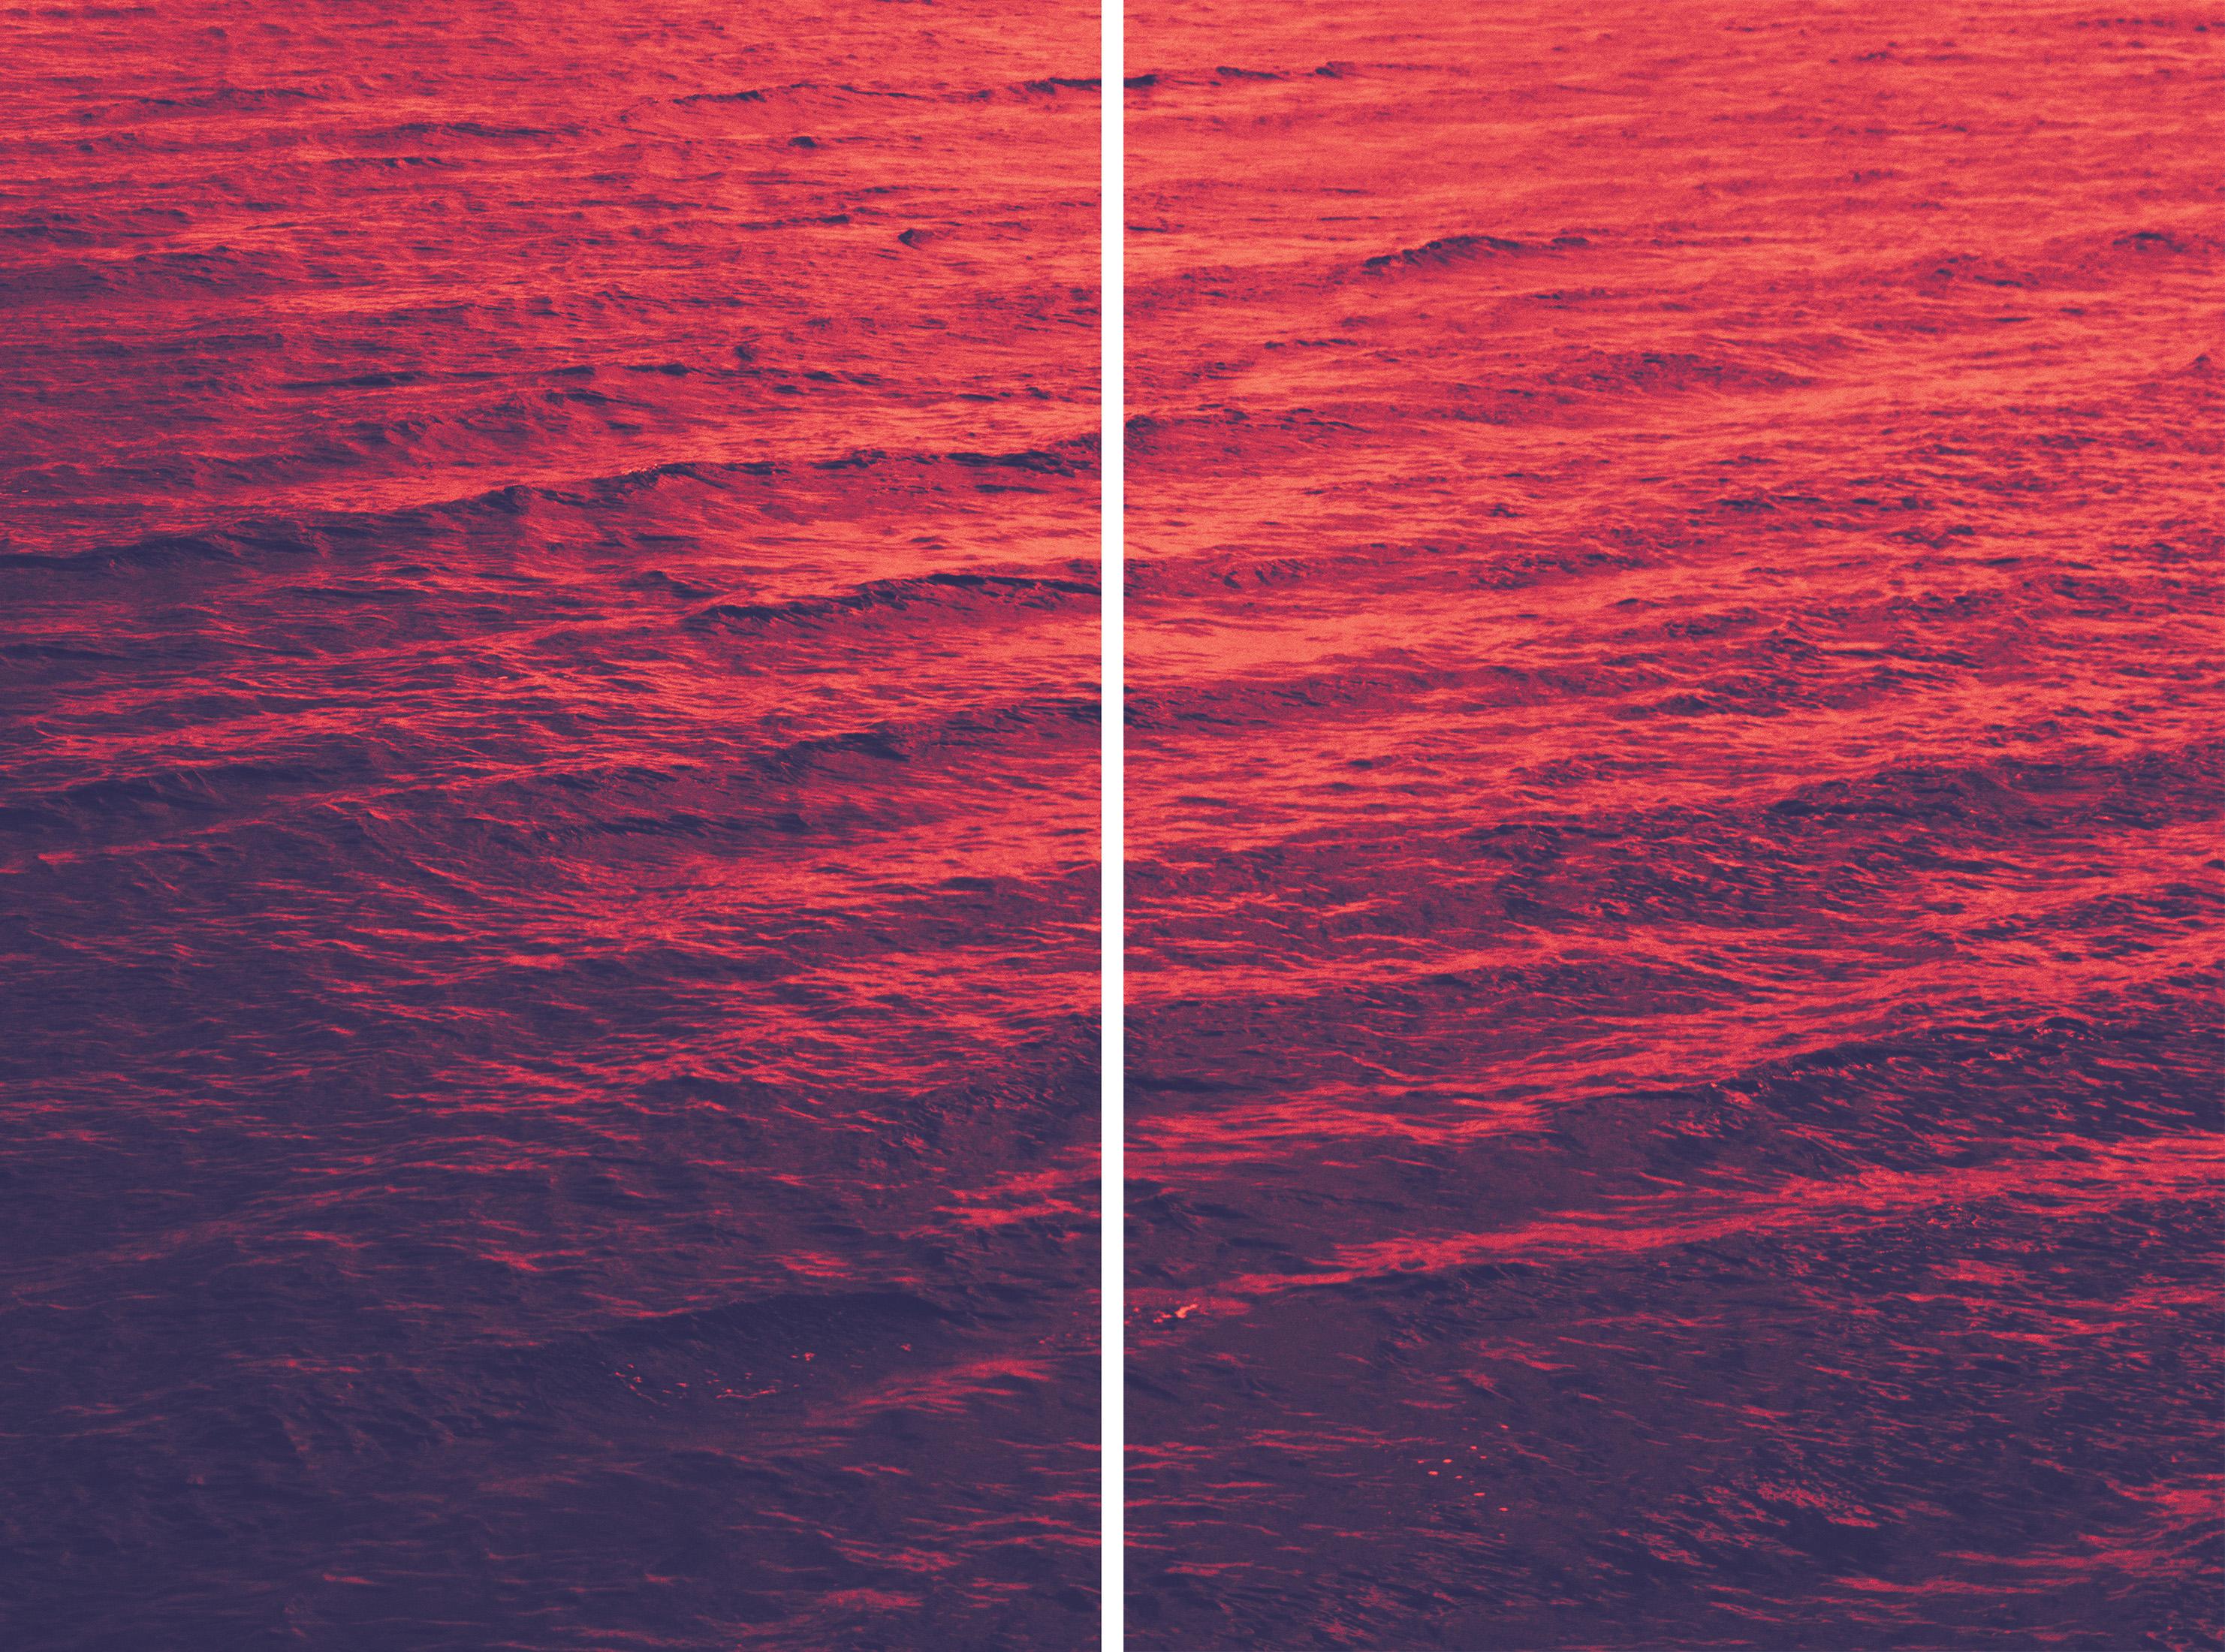 Color Photograph Ryan Rivadeneyra - Red Sea, Abstract Diptych, Giclée Print Golden Pink, Blue Mediterranean Seascape